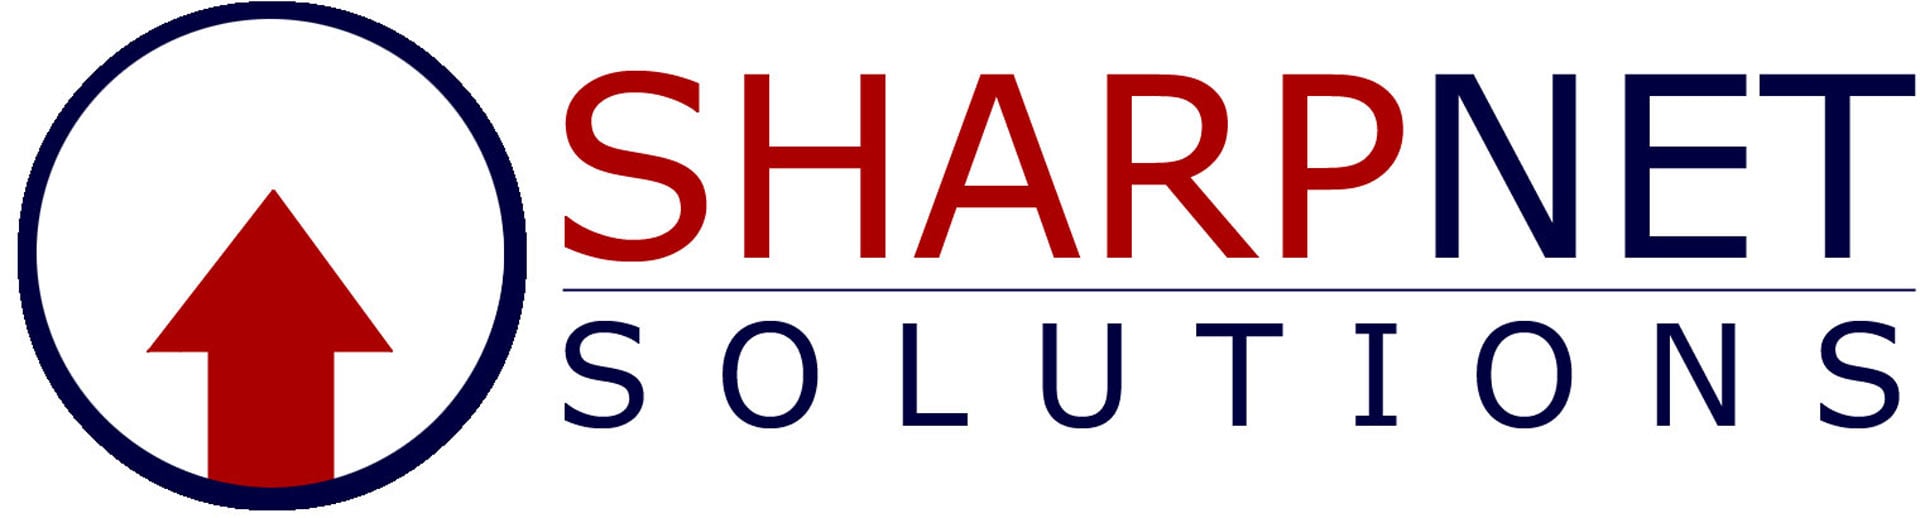 Best Local Online Marketing Company Logo: SharpNet